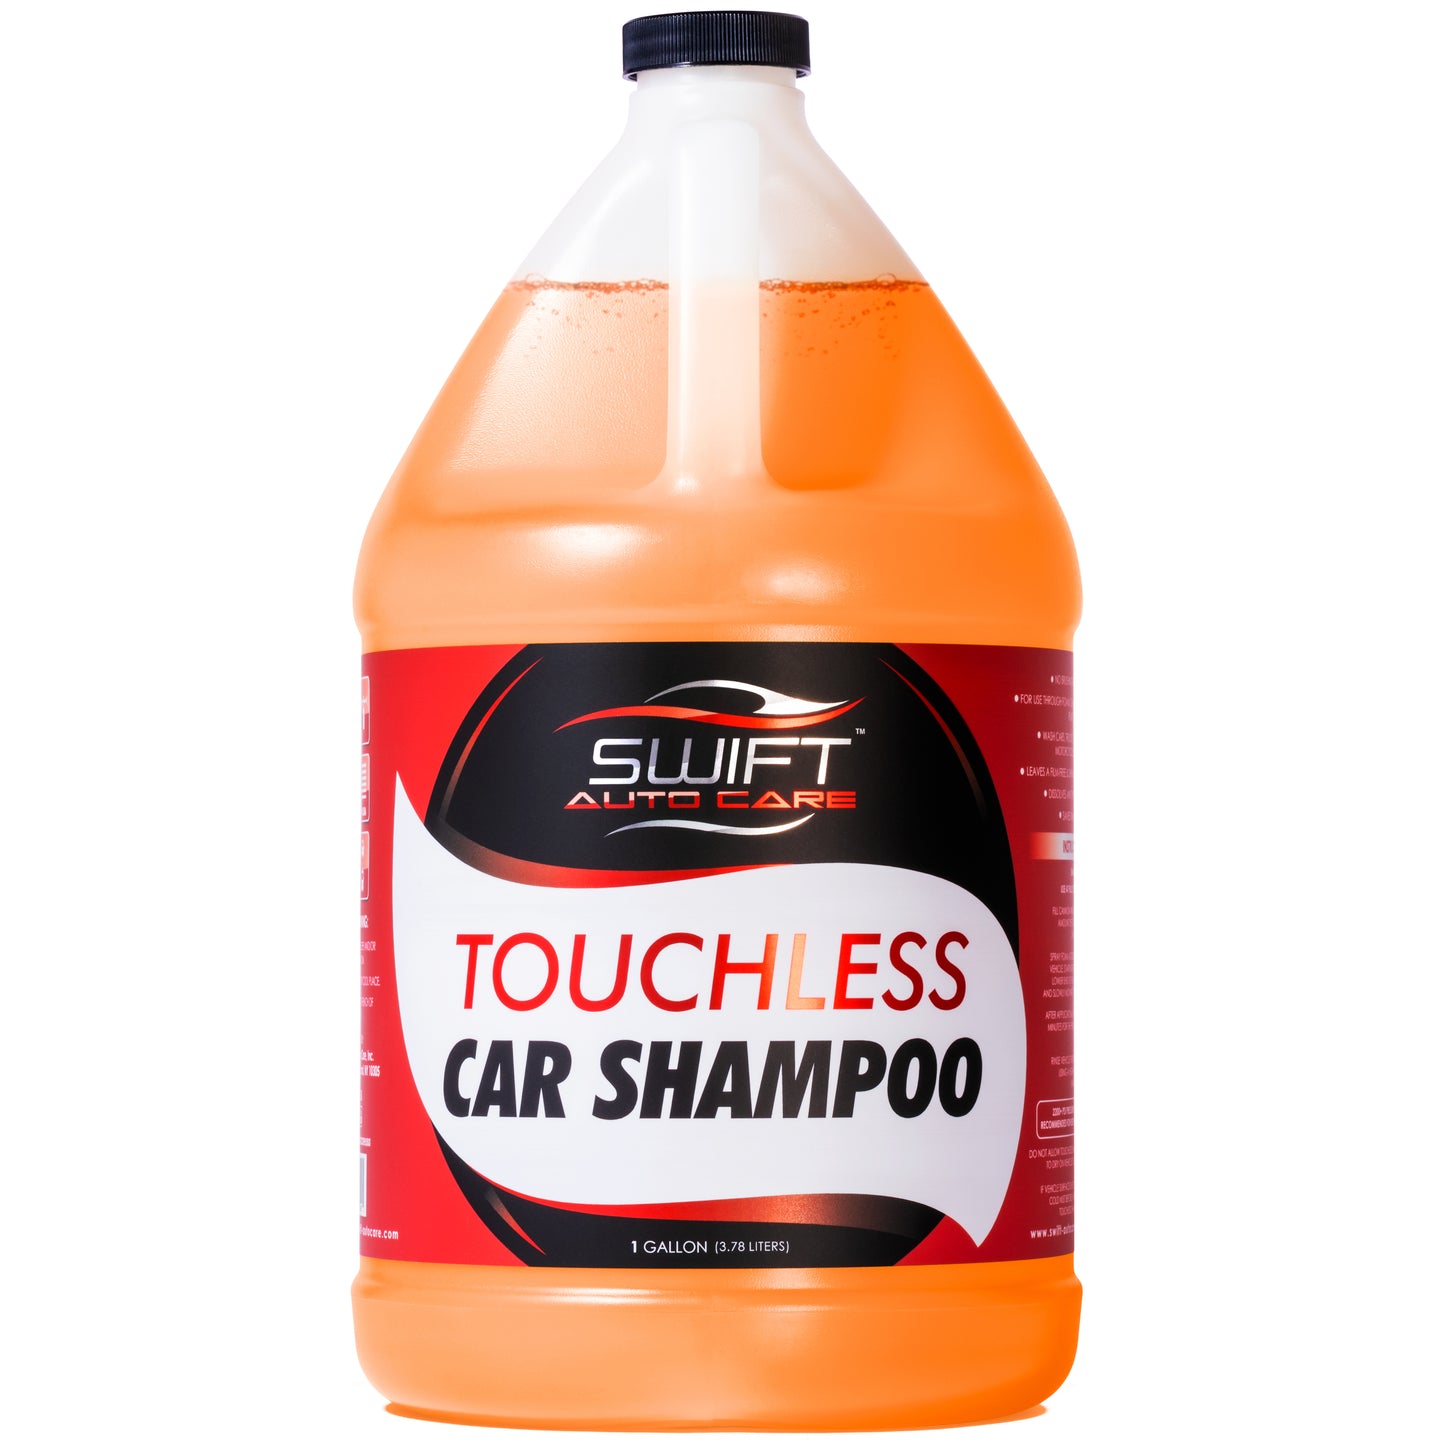 Swift Touchless Car Shampoo – Swift Auto Care